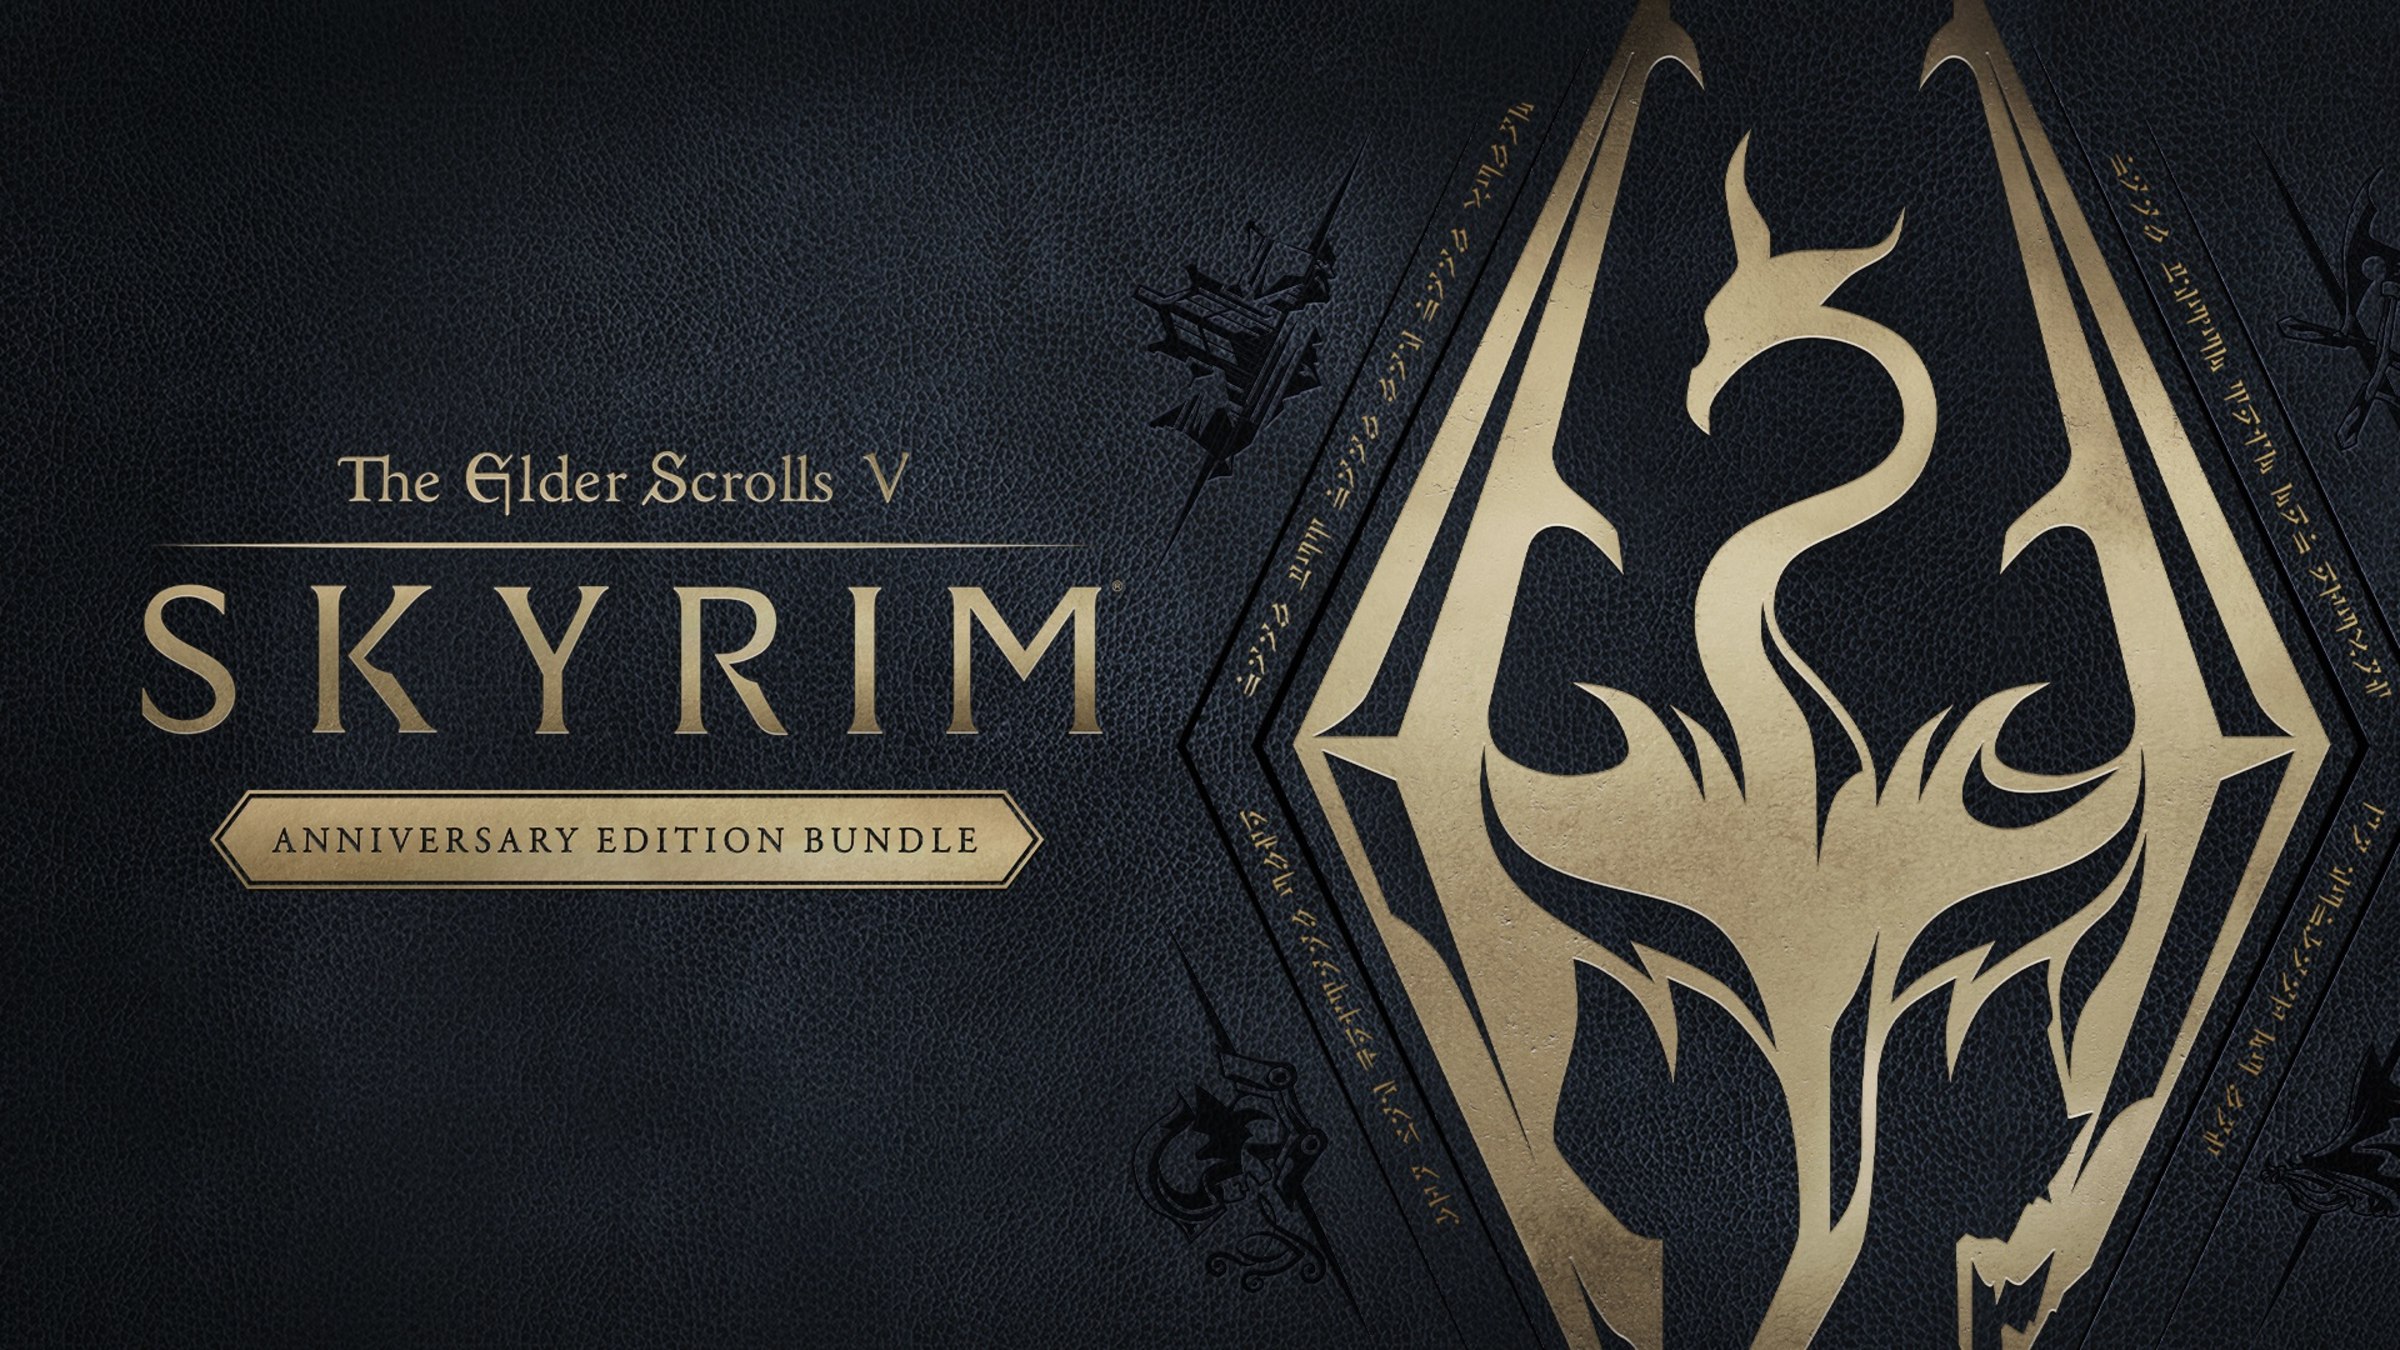 The Elder Scrolls V: Skyrim Anniversary Edition for Nintendo 